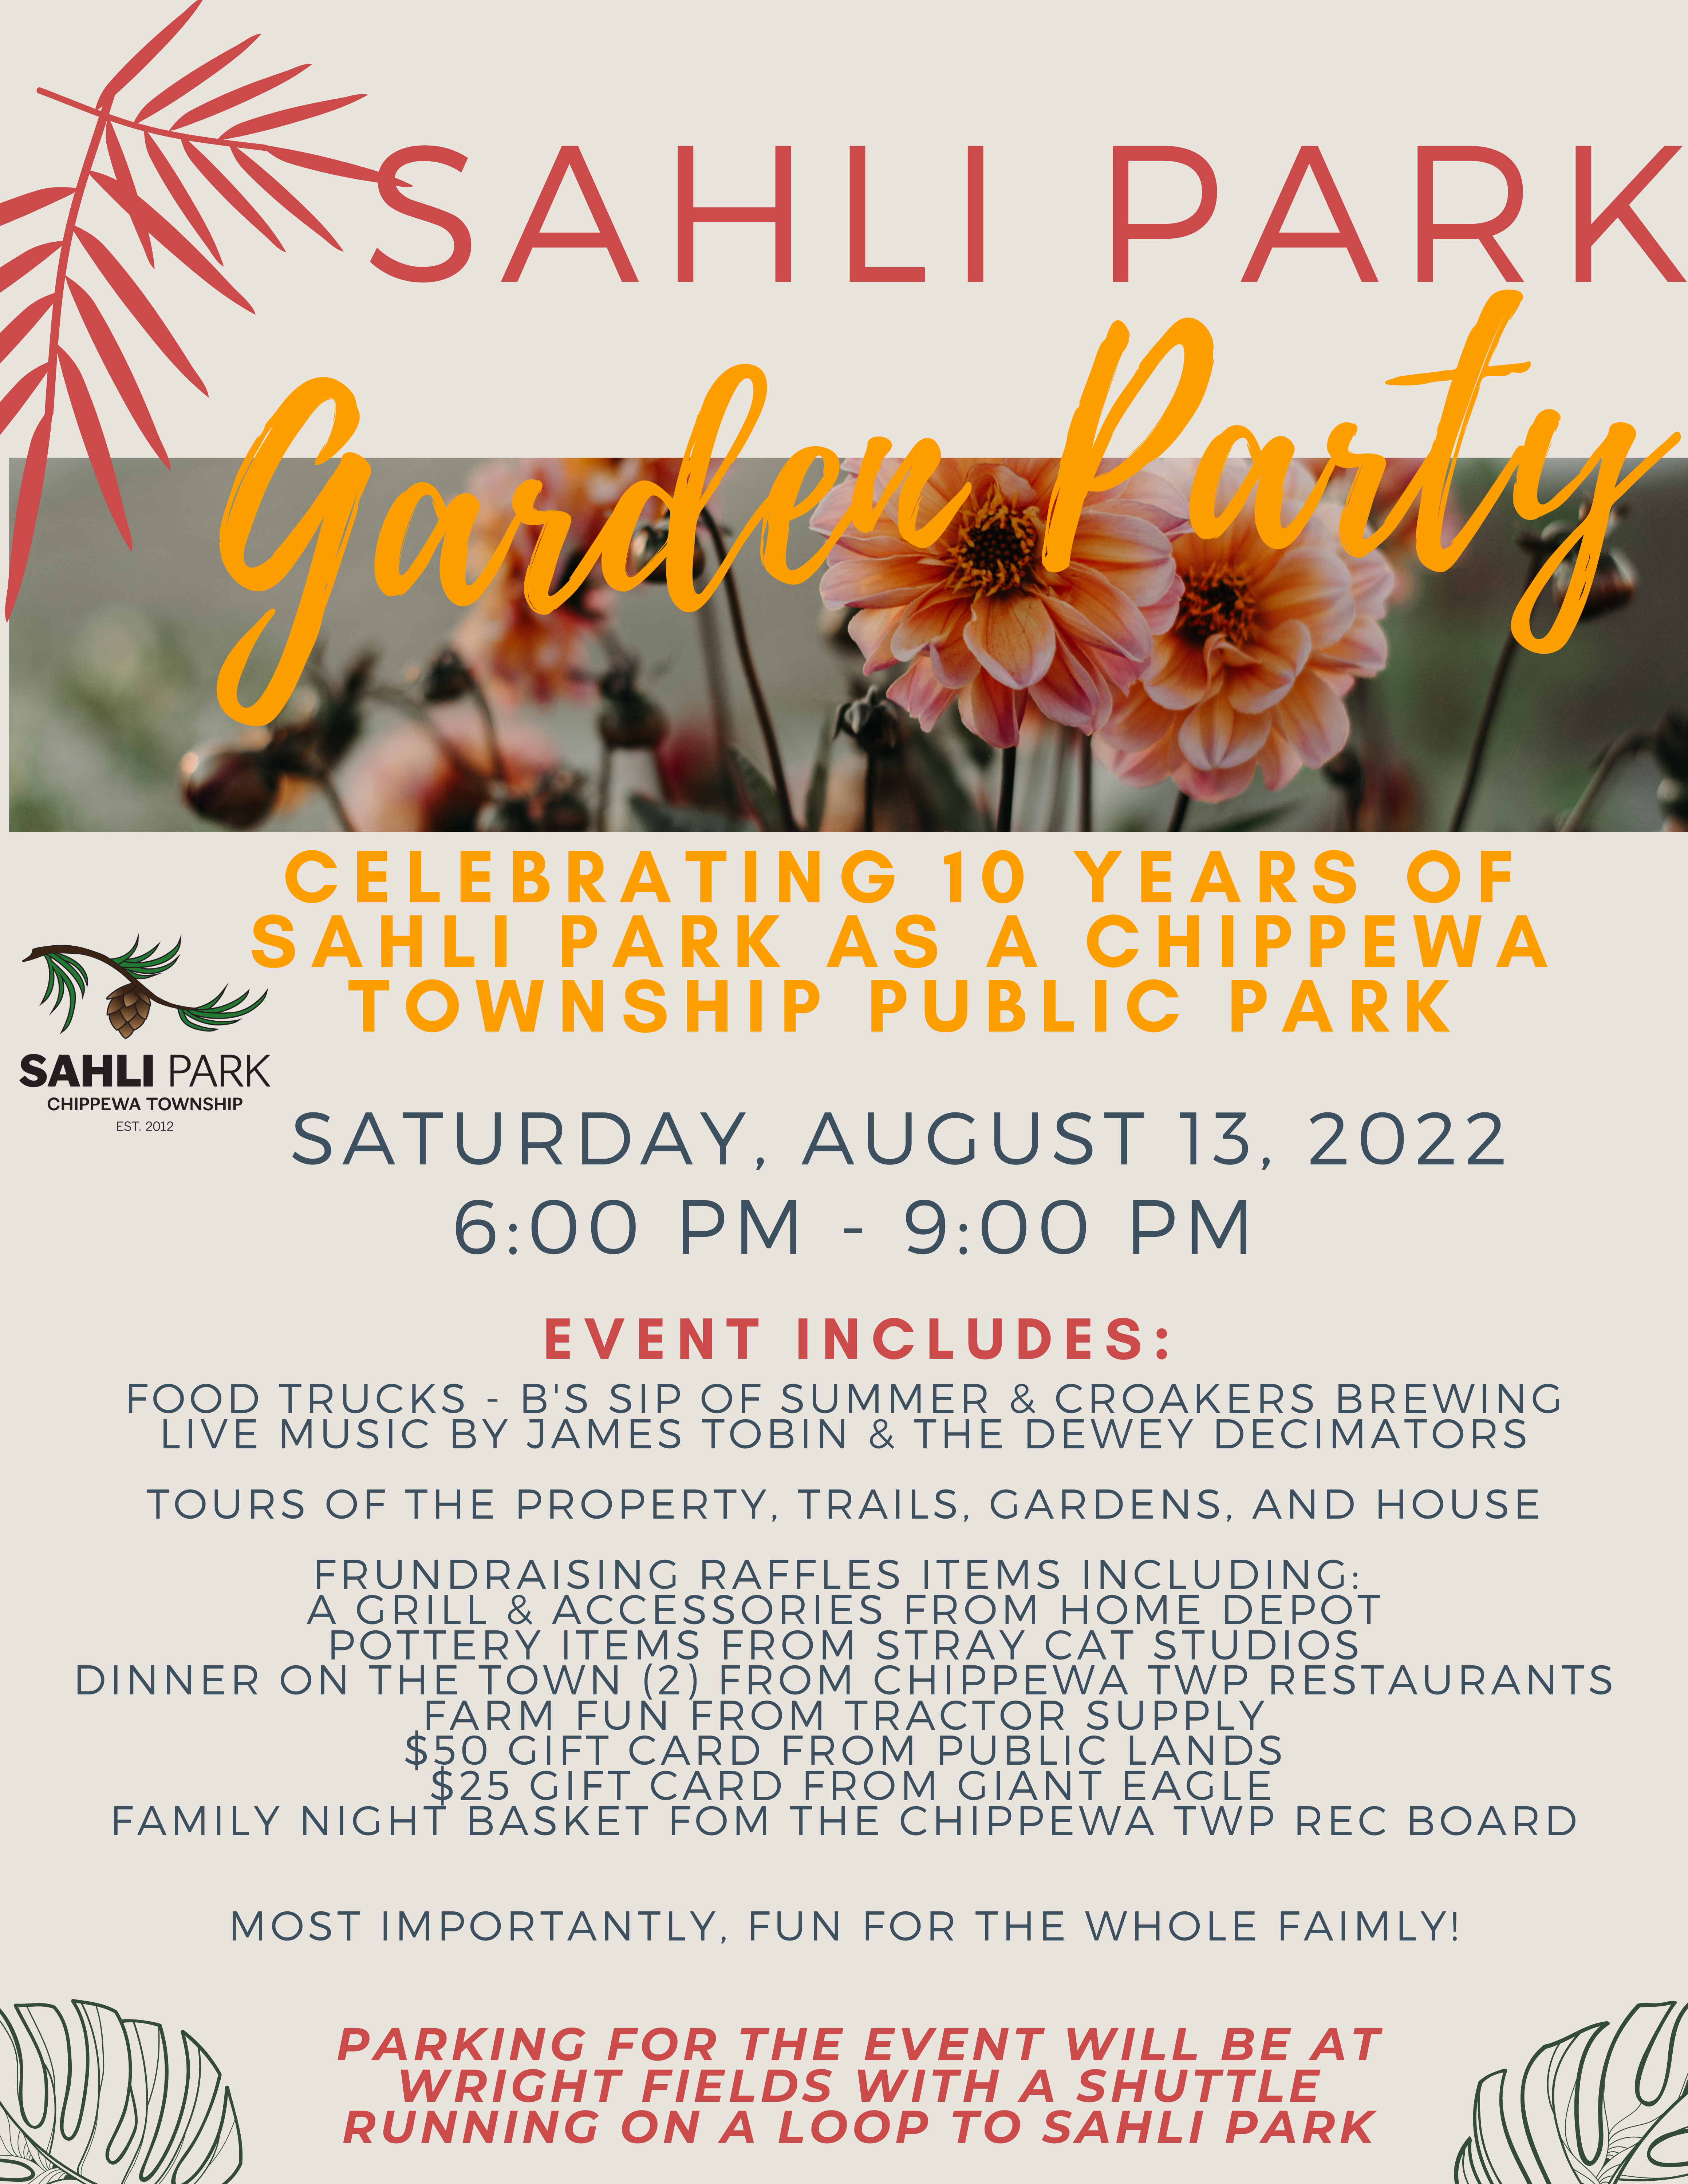 Sahli Garden Party - 10th Anniversary Celebration of Sahli Park